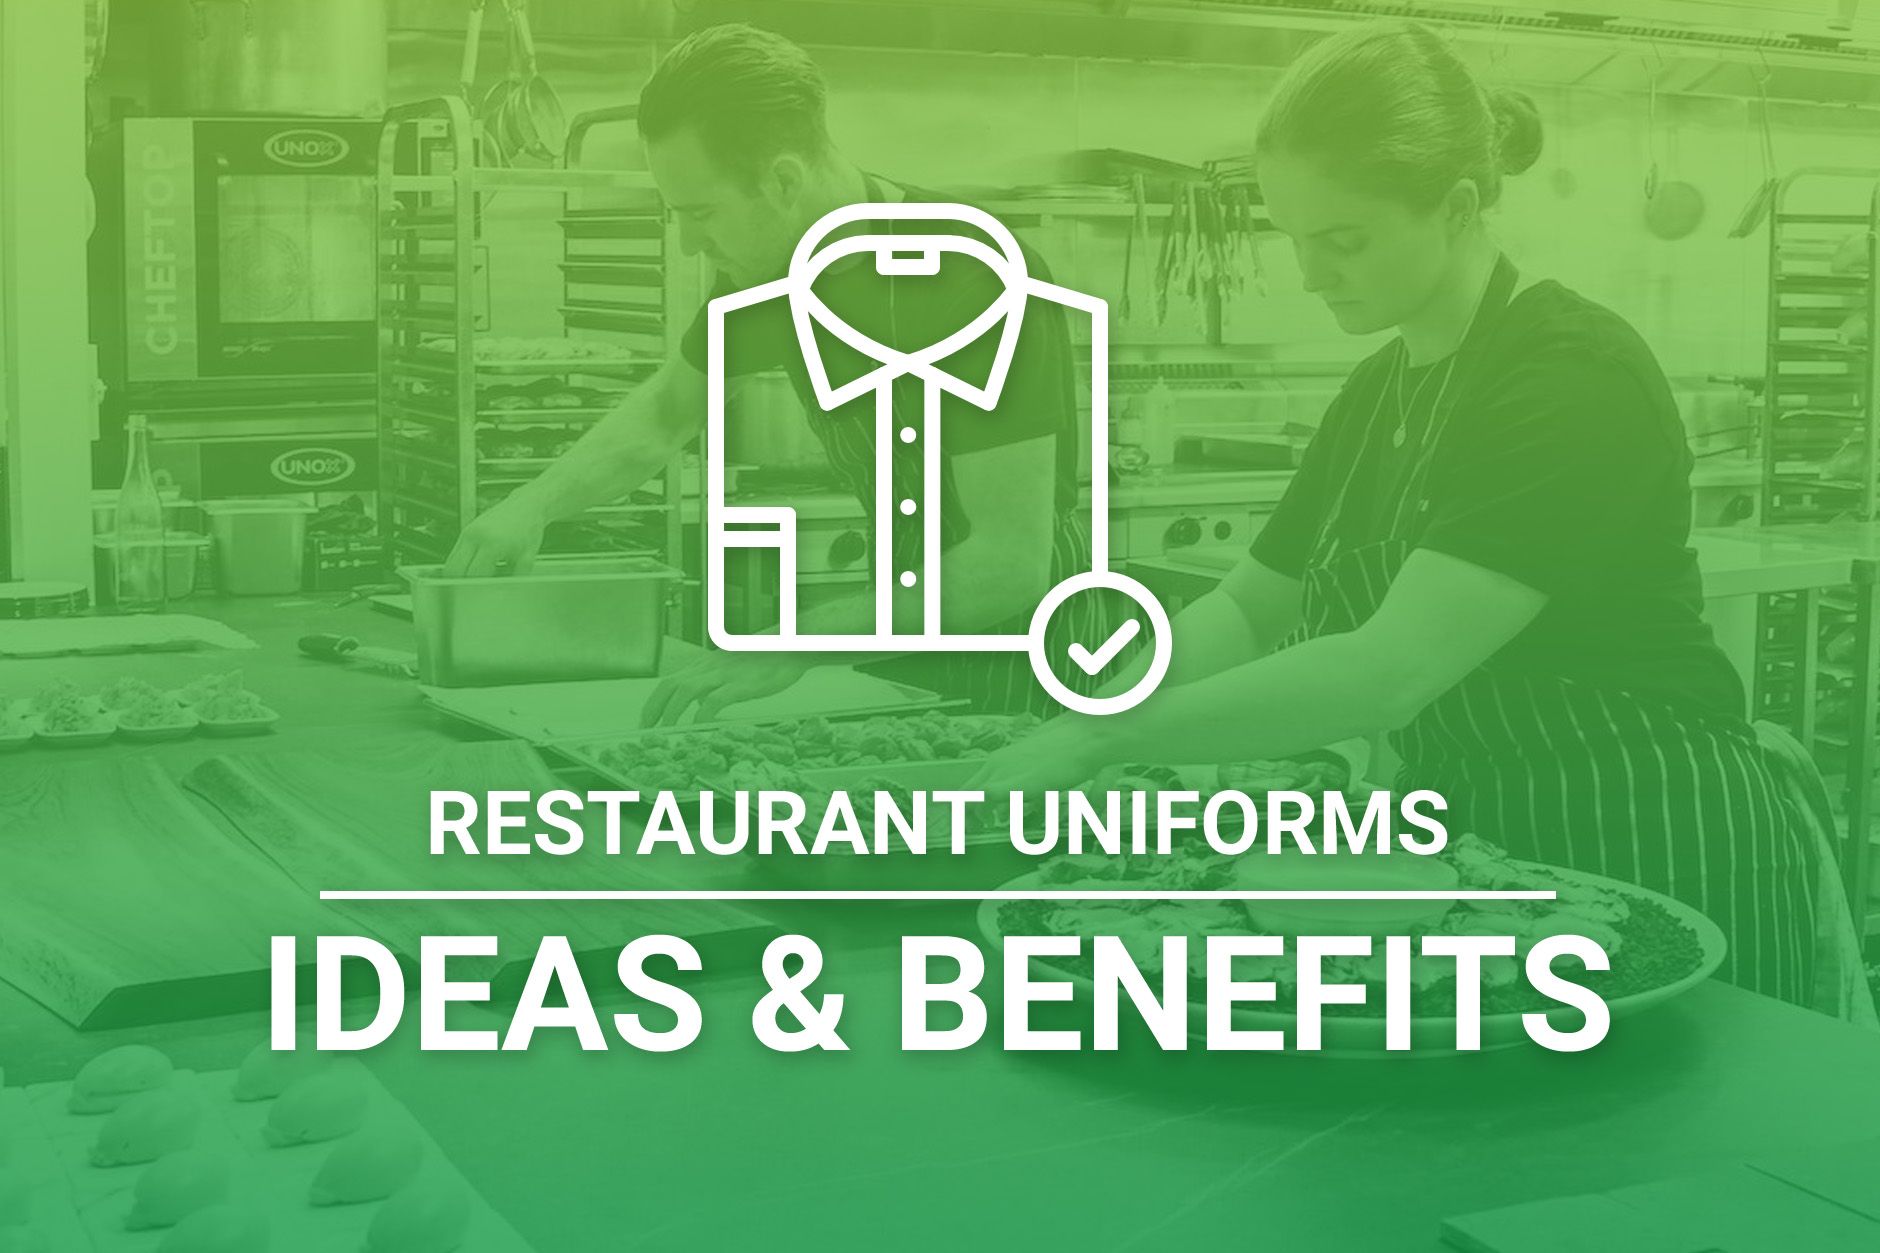 Restaurant Uniform Ideas & Benefits | Uniform Inspiration